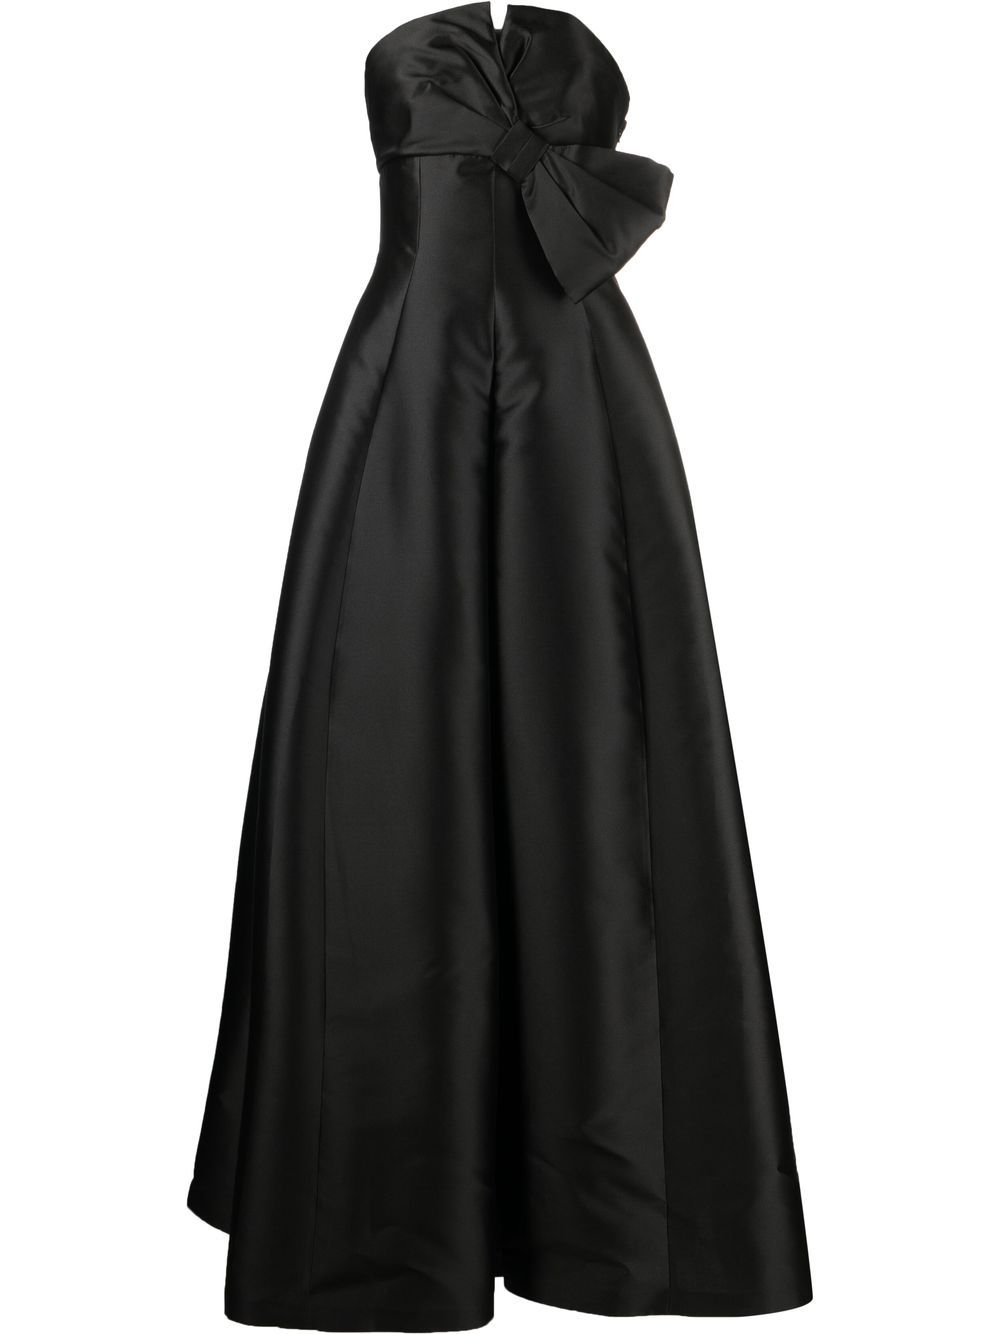 Alberta Ferretti bow-embellished evening gown